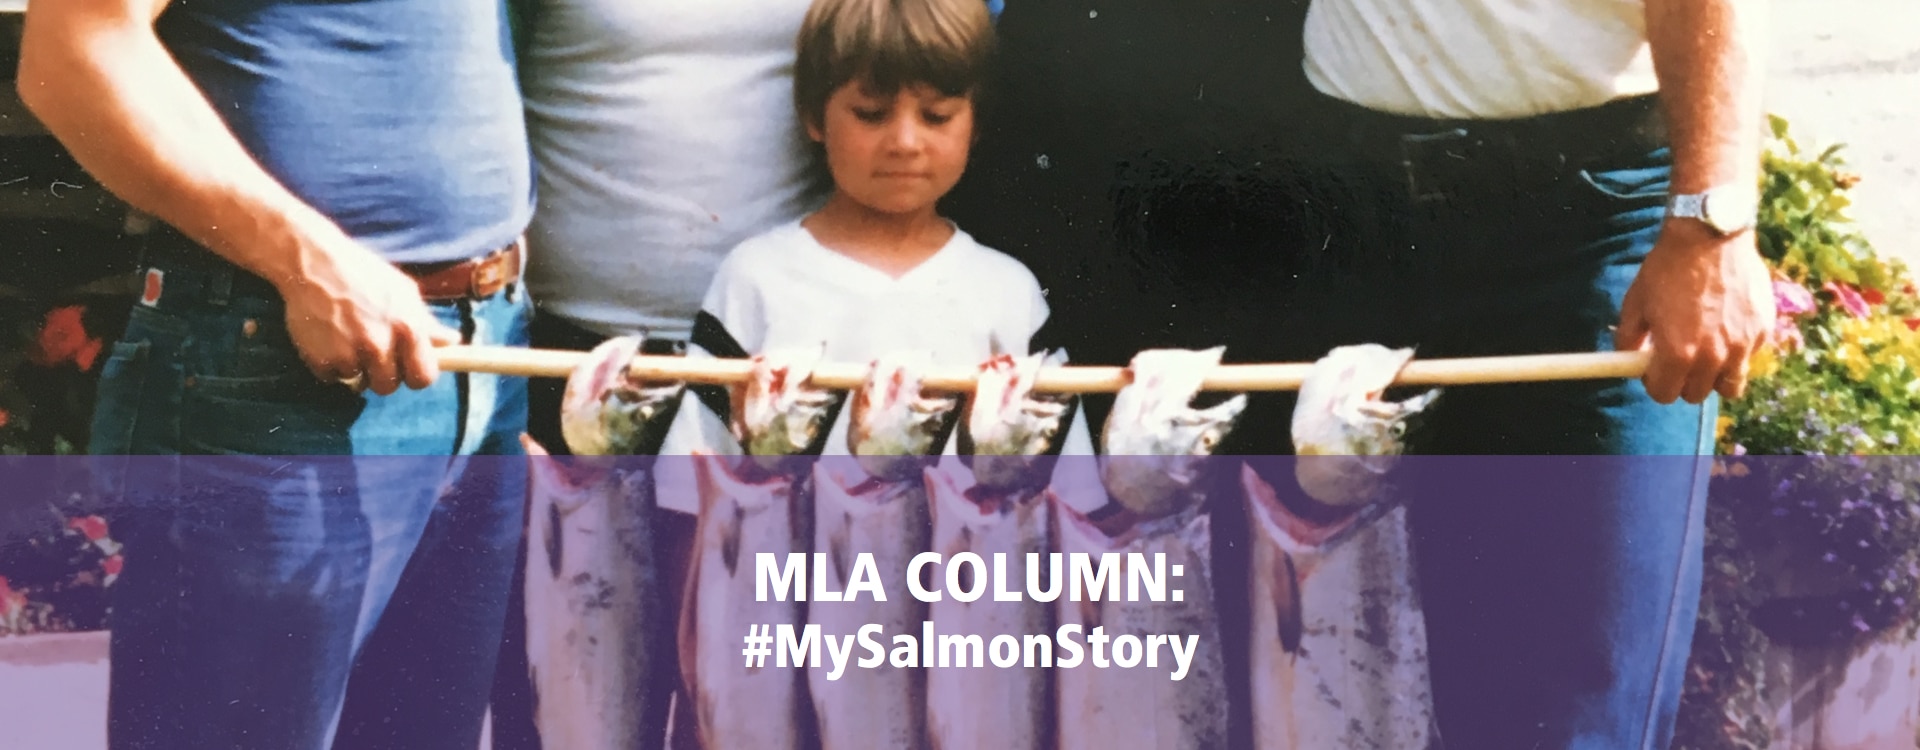 MLA COLUMN: #MySalmonStory